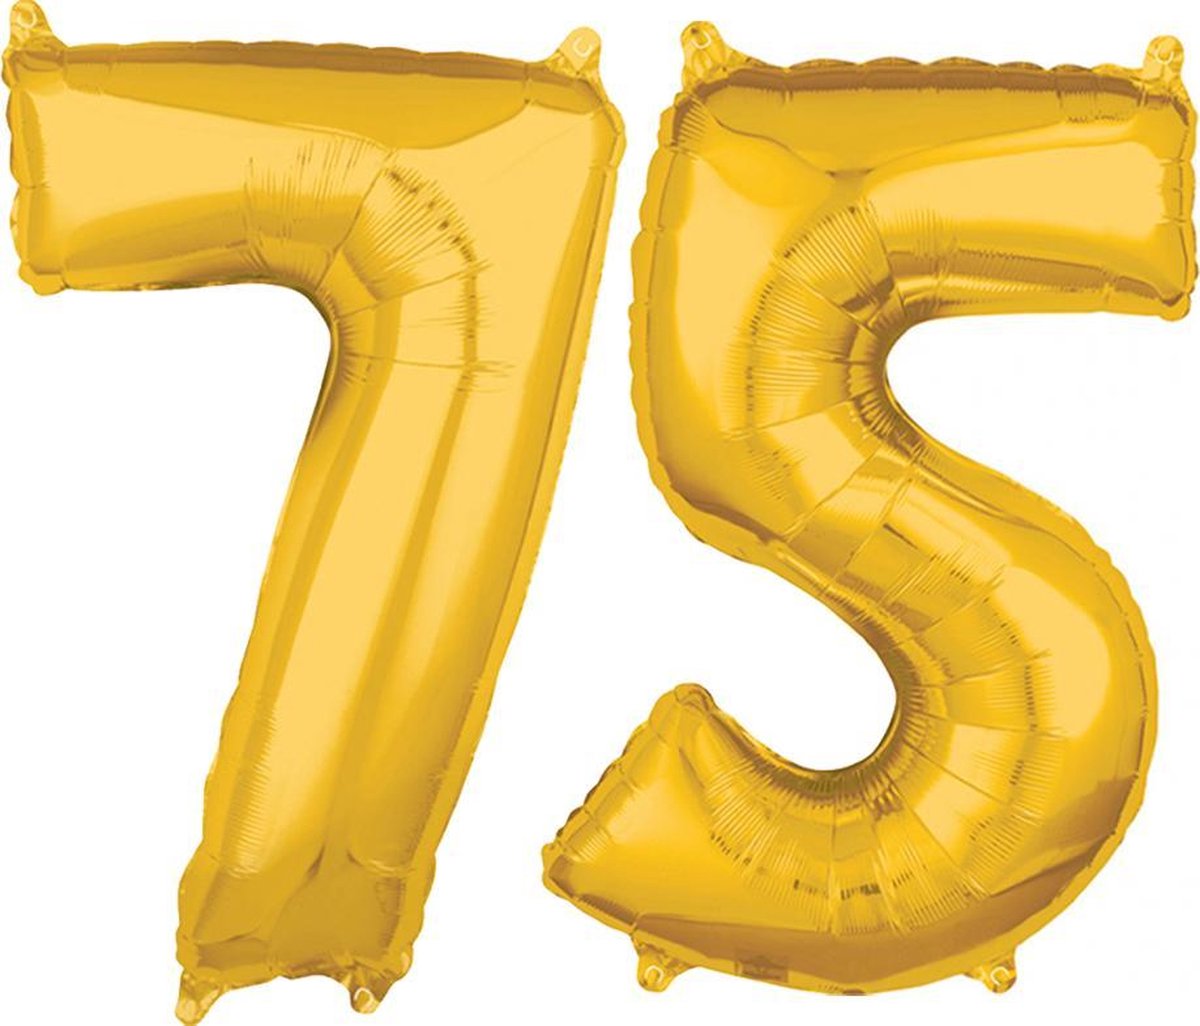 Gouden 75 cijfers ballonnen helium gevuld